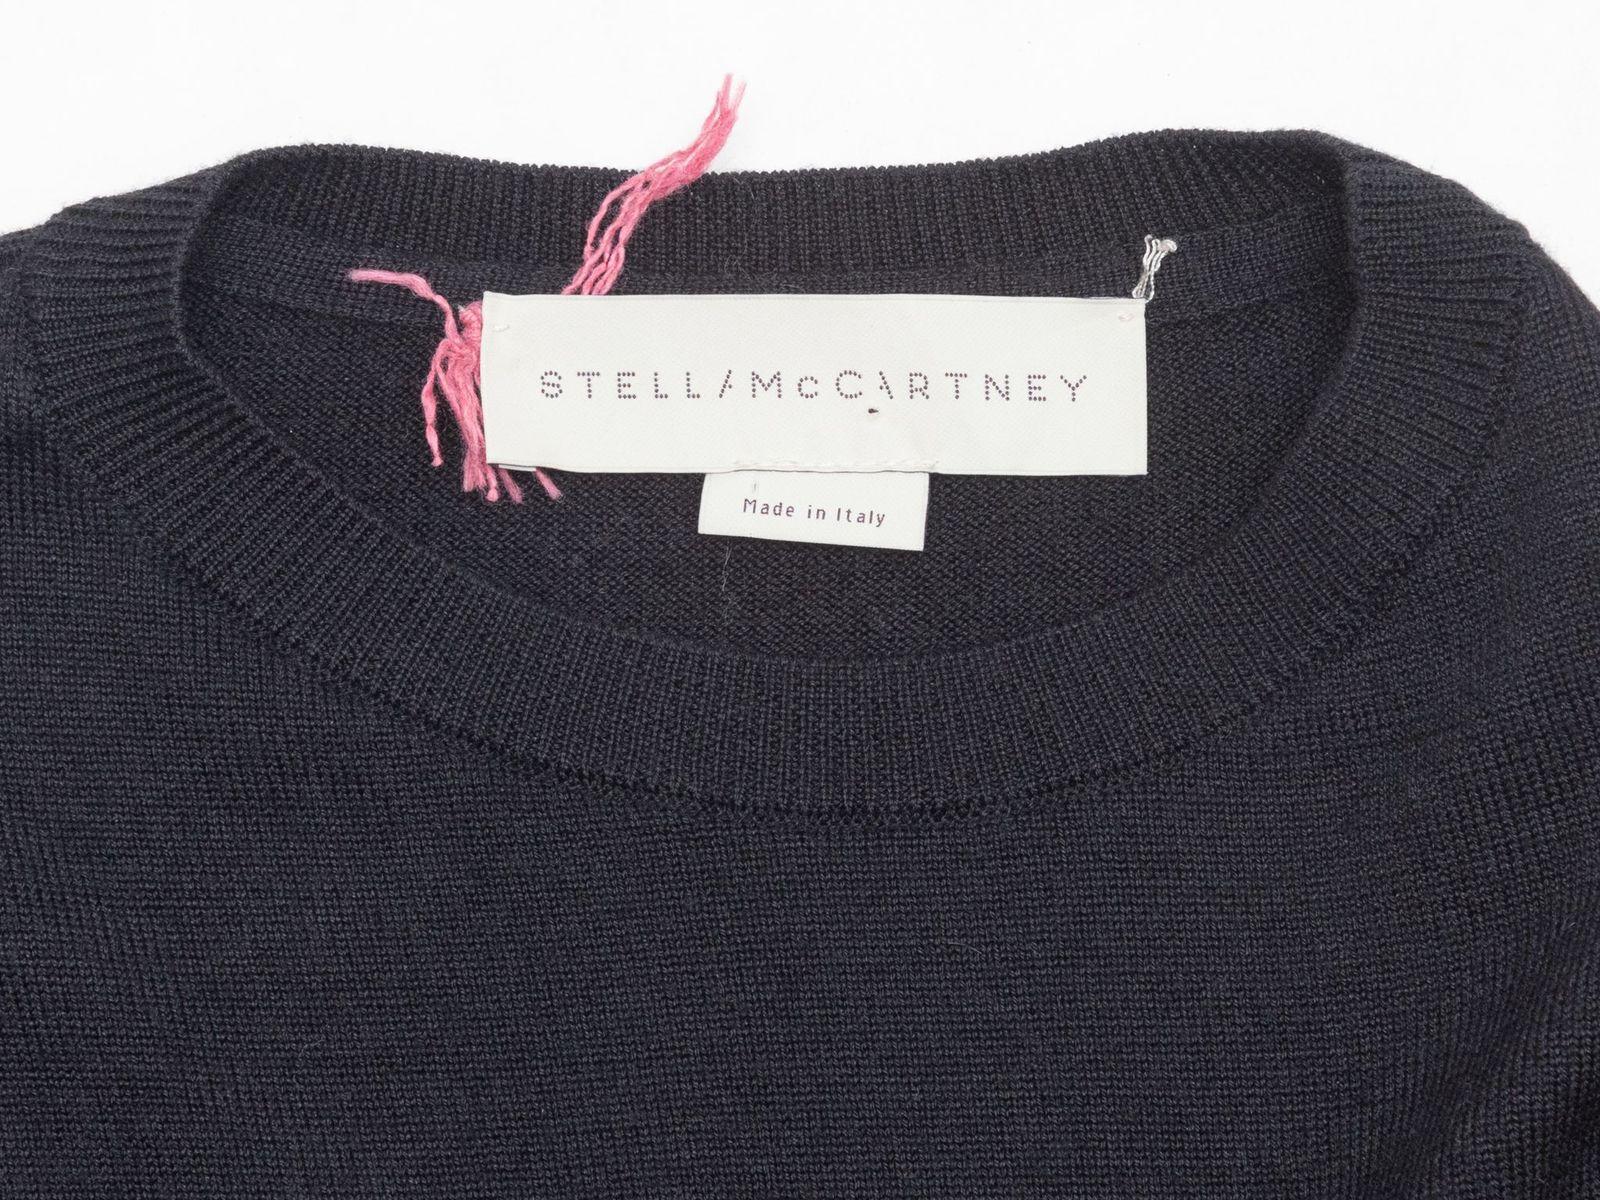 Stella McCartney Black & Multicolor Lipstick Motif Sweater 4